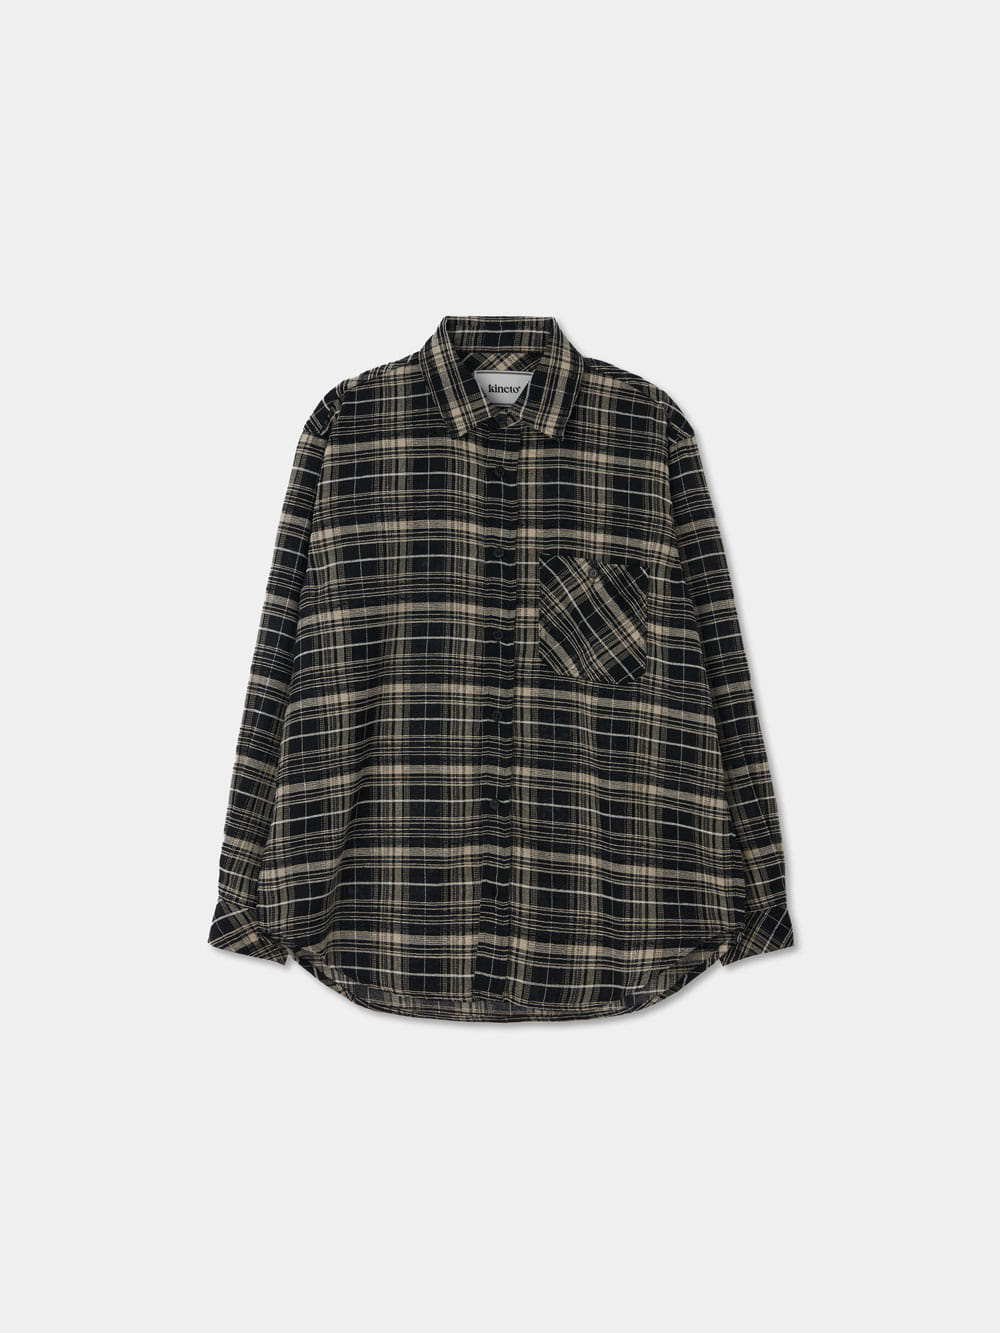 Emboss Checked Pattern Shirt_Tweed Black